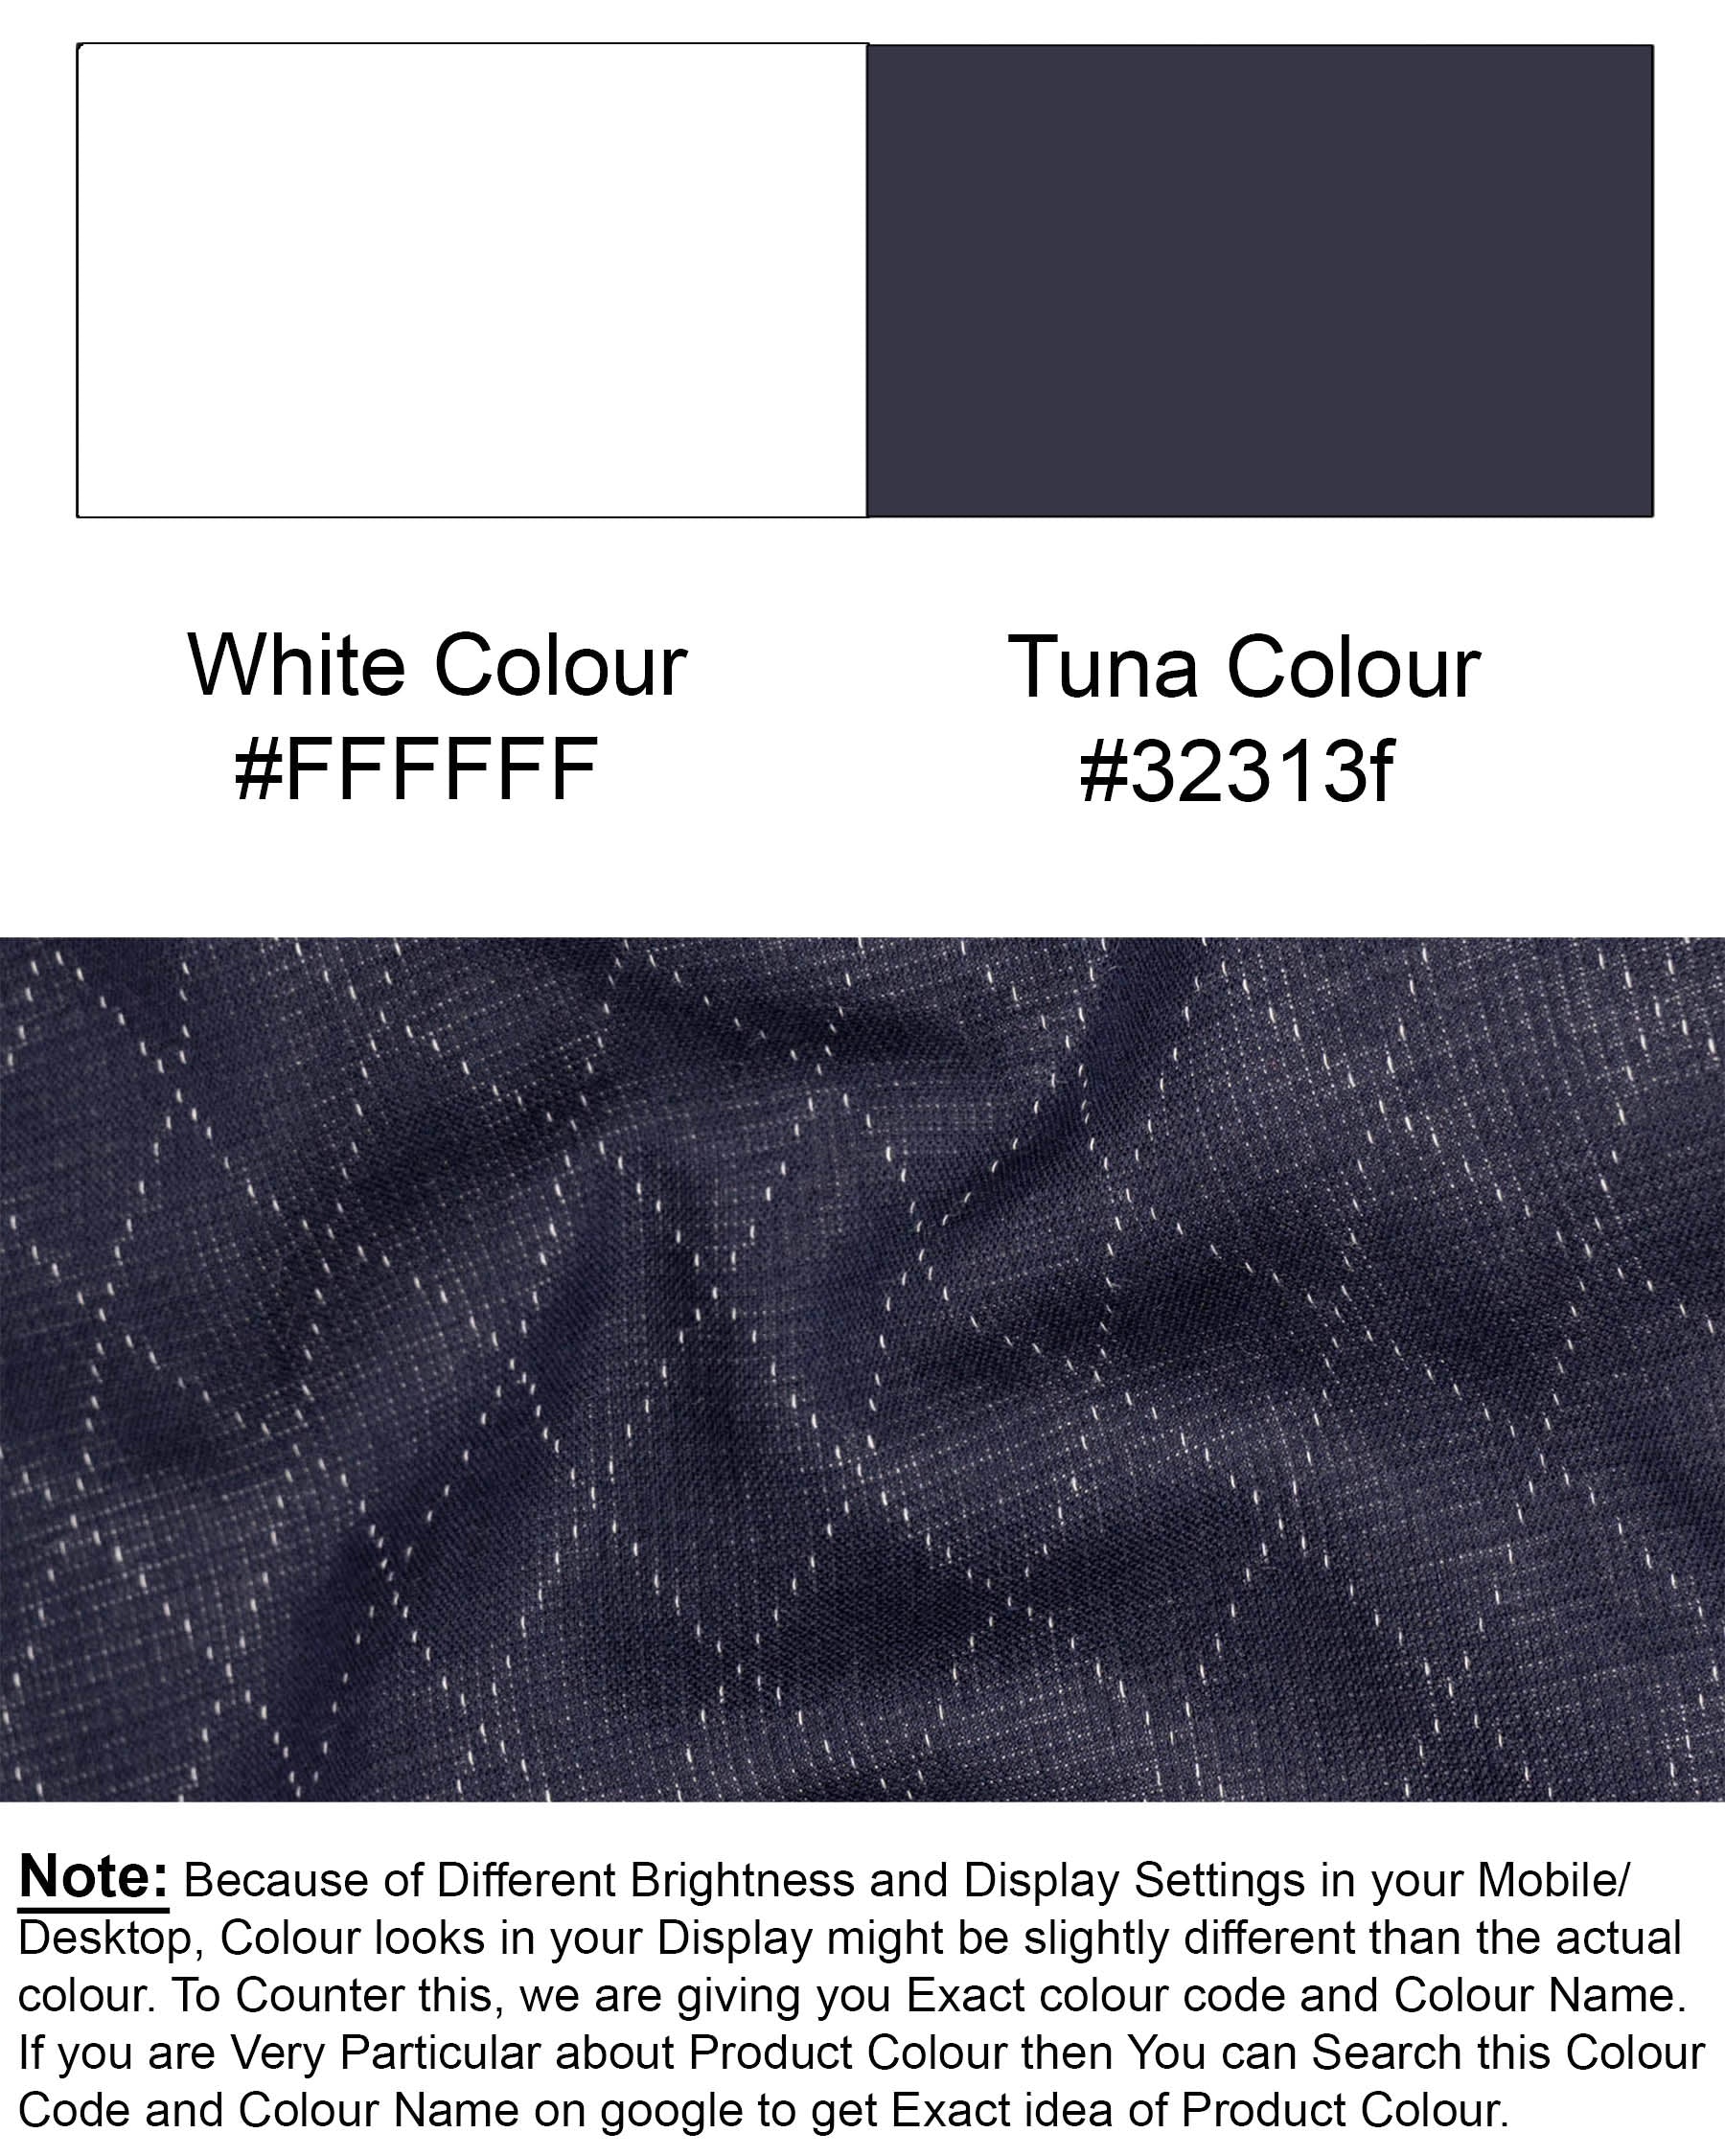 Tuna Blue Twill Textured Double Cloth Premium Cotton Shirt 6183-CLOTH-P-38, 6183-CLOTH-P-H-38, 6183-CLOTH-P-39, 6183-CLOTH-P-H-39, 6183-CLOTH-P-40, 6183-CLOTH-P-H-40, 6183-CLOTH-P-42, 6183-CLOTH-P-H-42, 6183-CLOTH-P-44, 6183-CLOTH-P-H-44, 6183-CLOTH-P-46, 6183-CLOTH-P-H-46, 6183-CLOTH-P-48, 6183-CLOTH-P-H-48, 6183-CLOTH-P-50, 6183-CLOTH-P-H-50, 6183-CLOTH-P-52, 6183-CLOTH-P-H-52